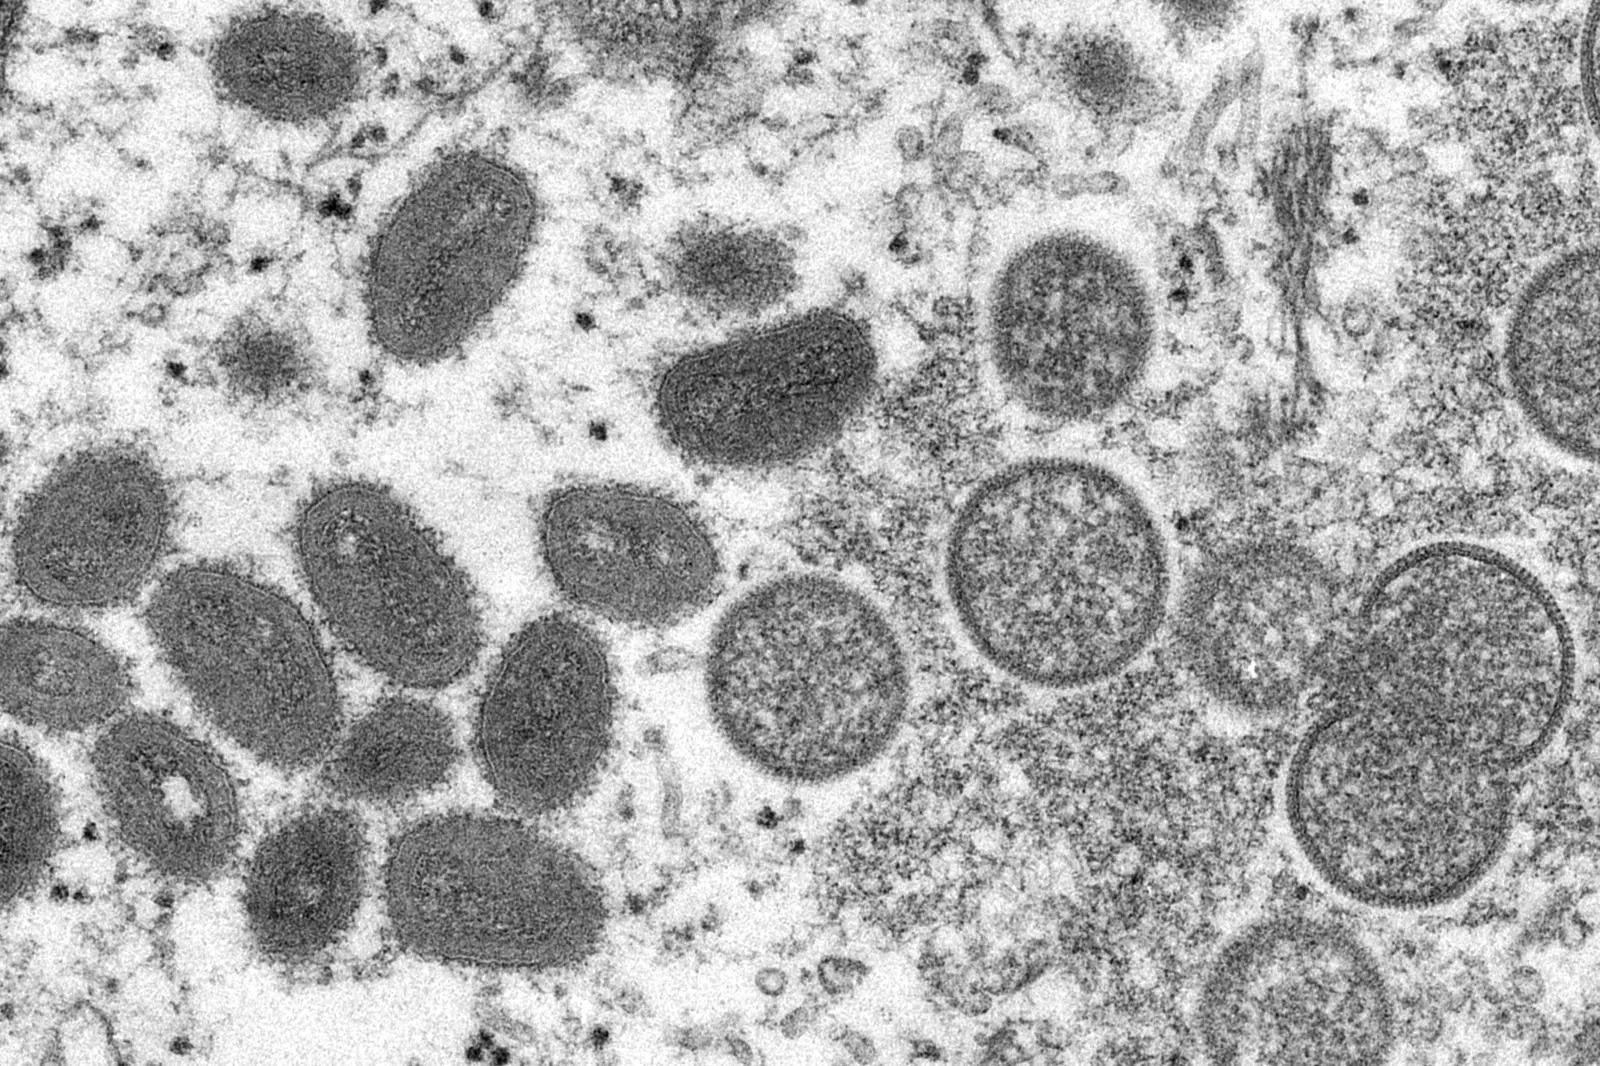 پون: ICMR-NIV سویه A.2 ویروس آبله میمون را در دو مسافر بازگشته امارات نشان داد